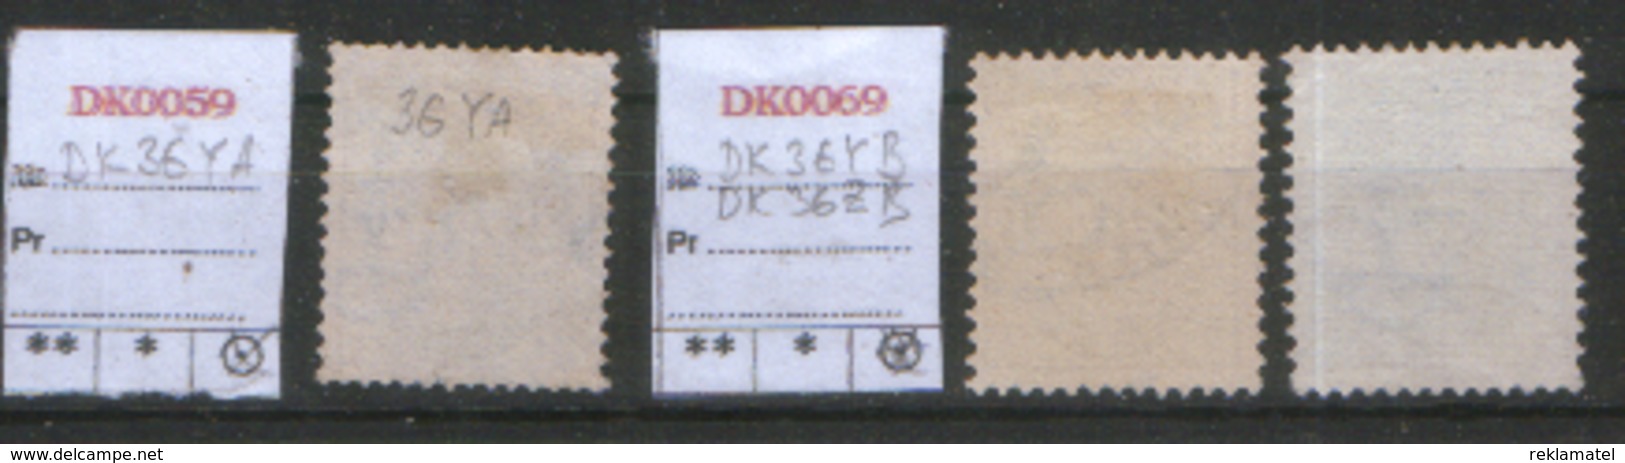 DANMARK 1885  DK 36 YA YB ZB Mi $4.7 - Usati